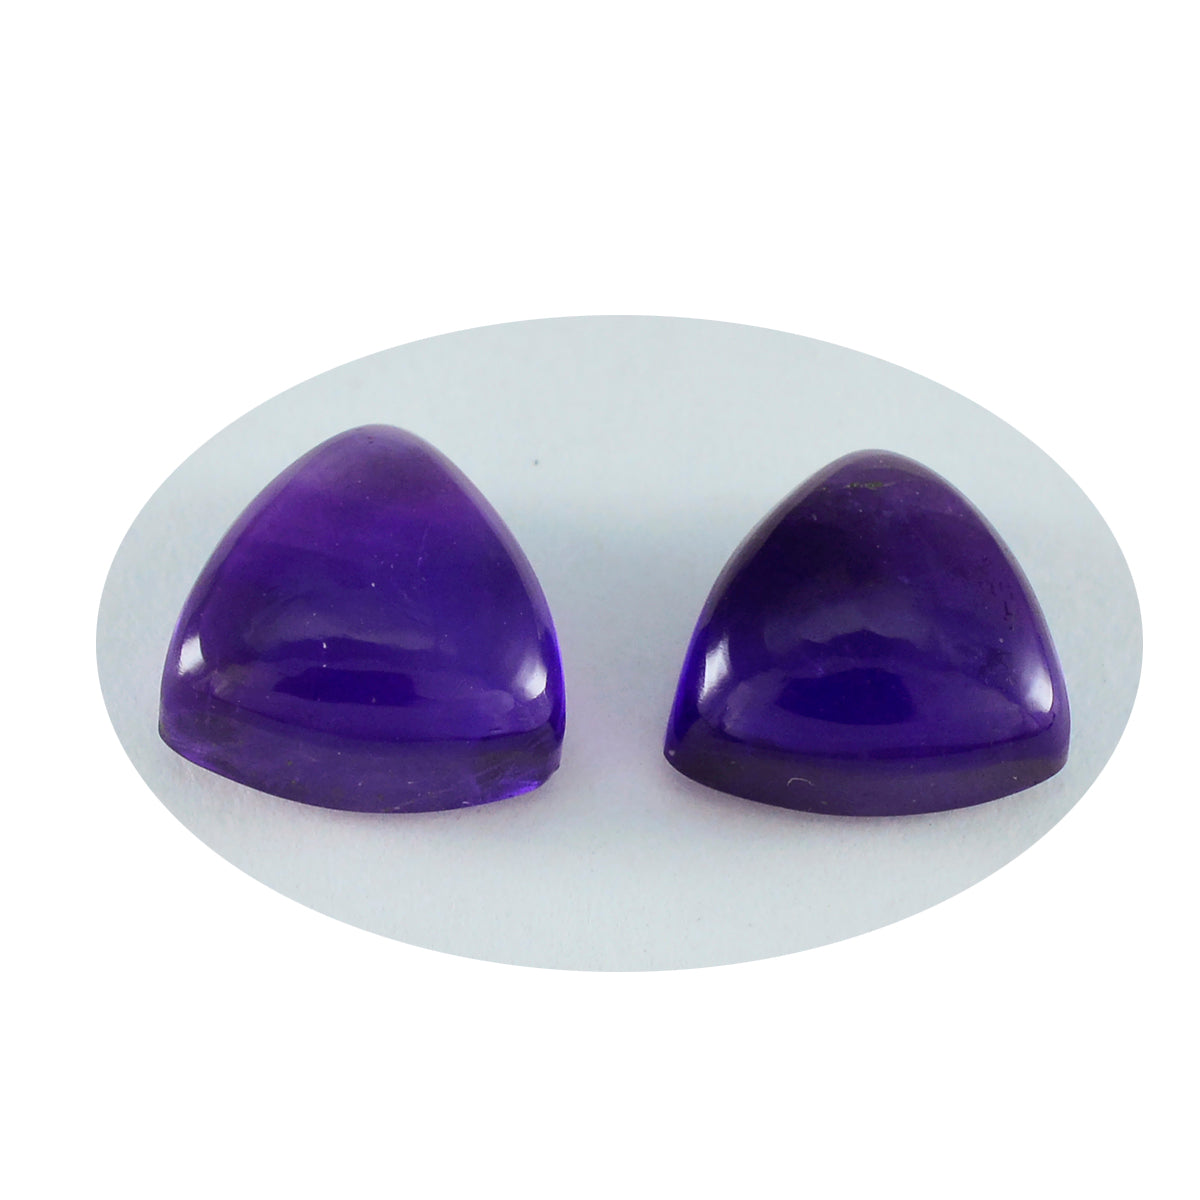 Riyogems 1PC Purple Amethyst Cabochon 7x7 mm Trillion Shape startling Quality Loose Stone